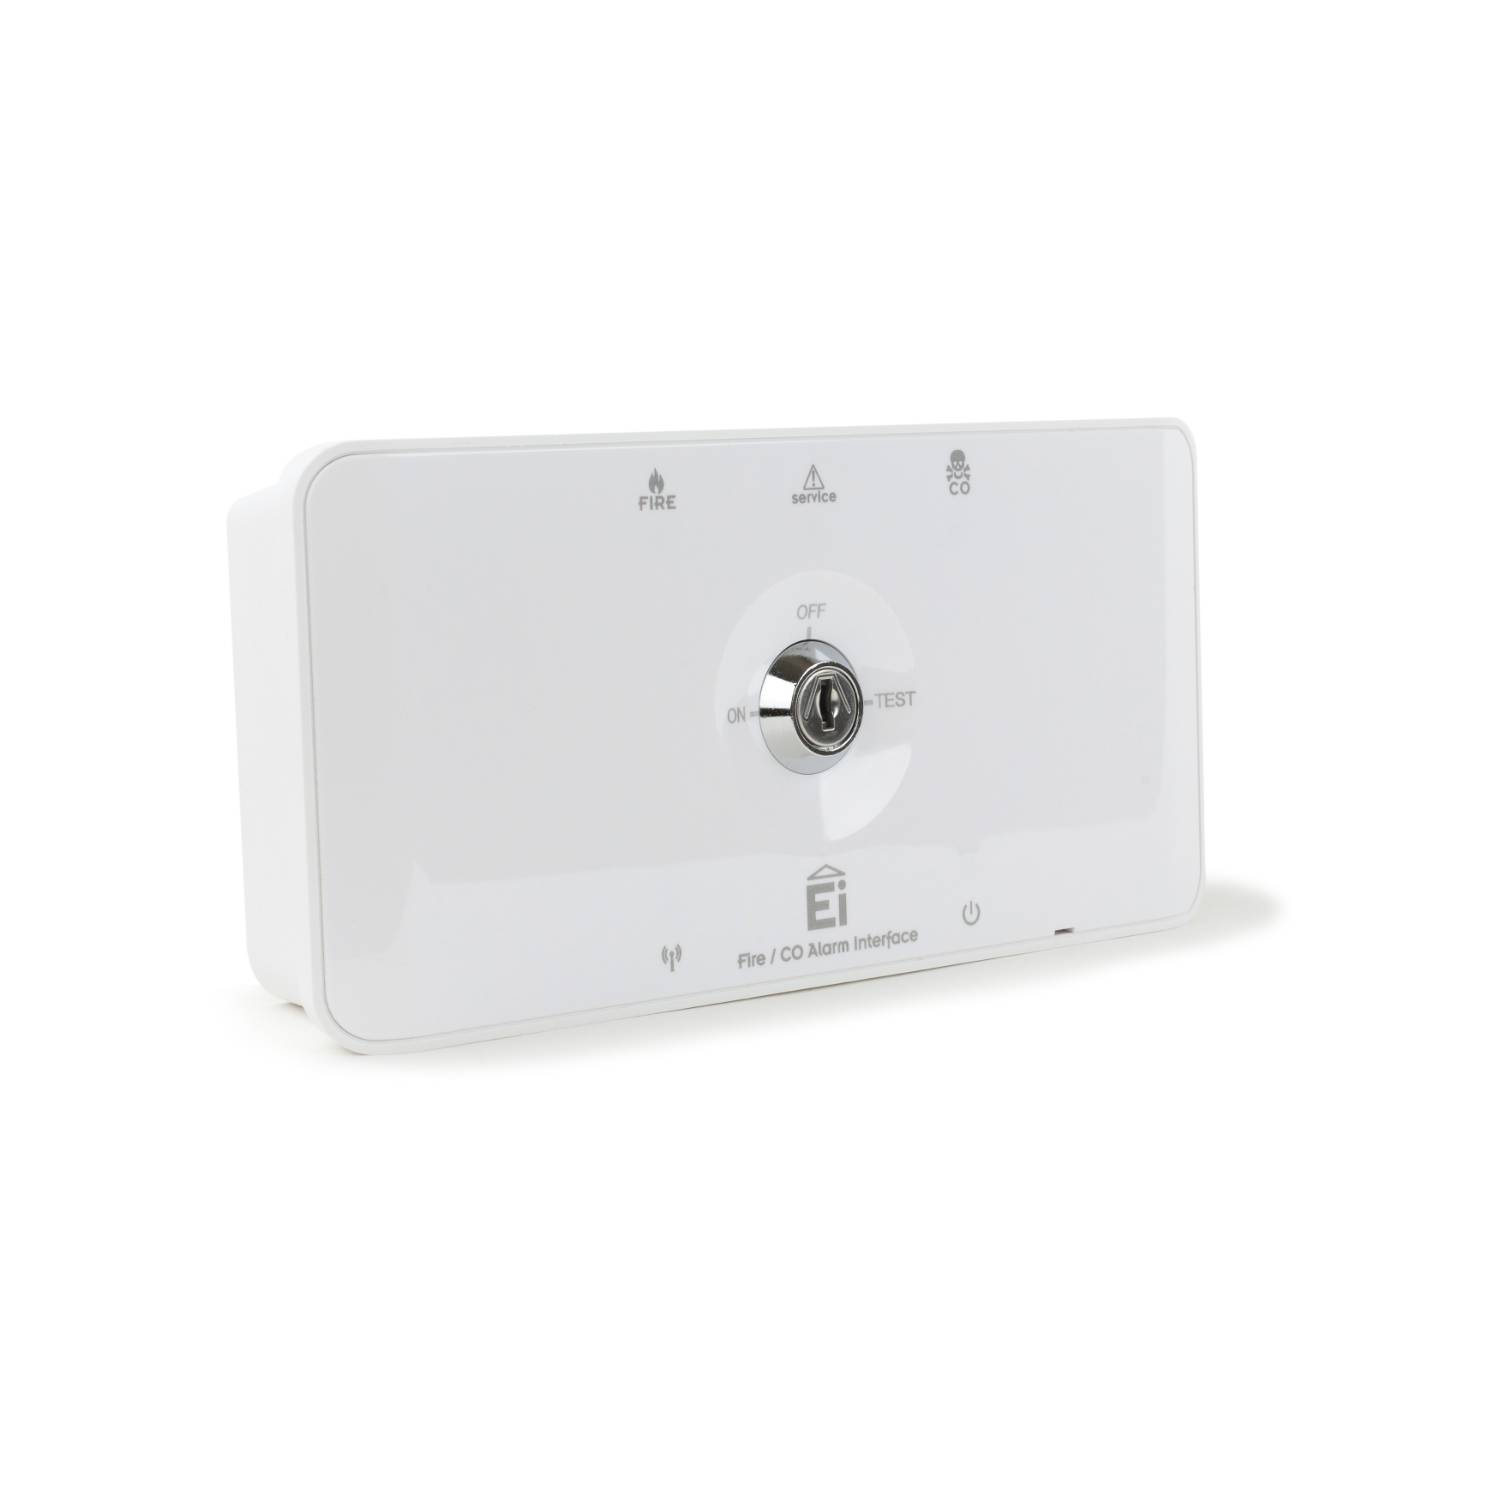 Ei414 RadioLINK Fire/Carbon Monoxide (CO) Alarm Interface - Alarm Interface